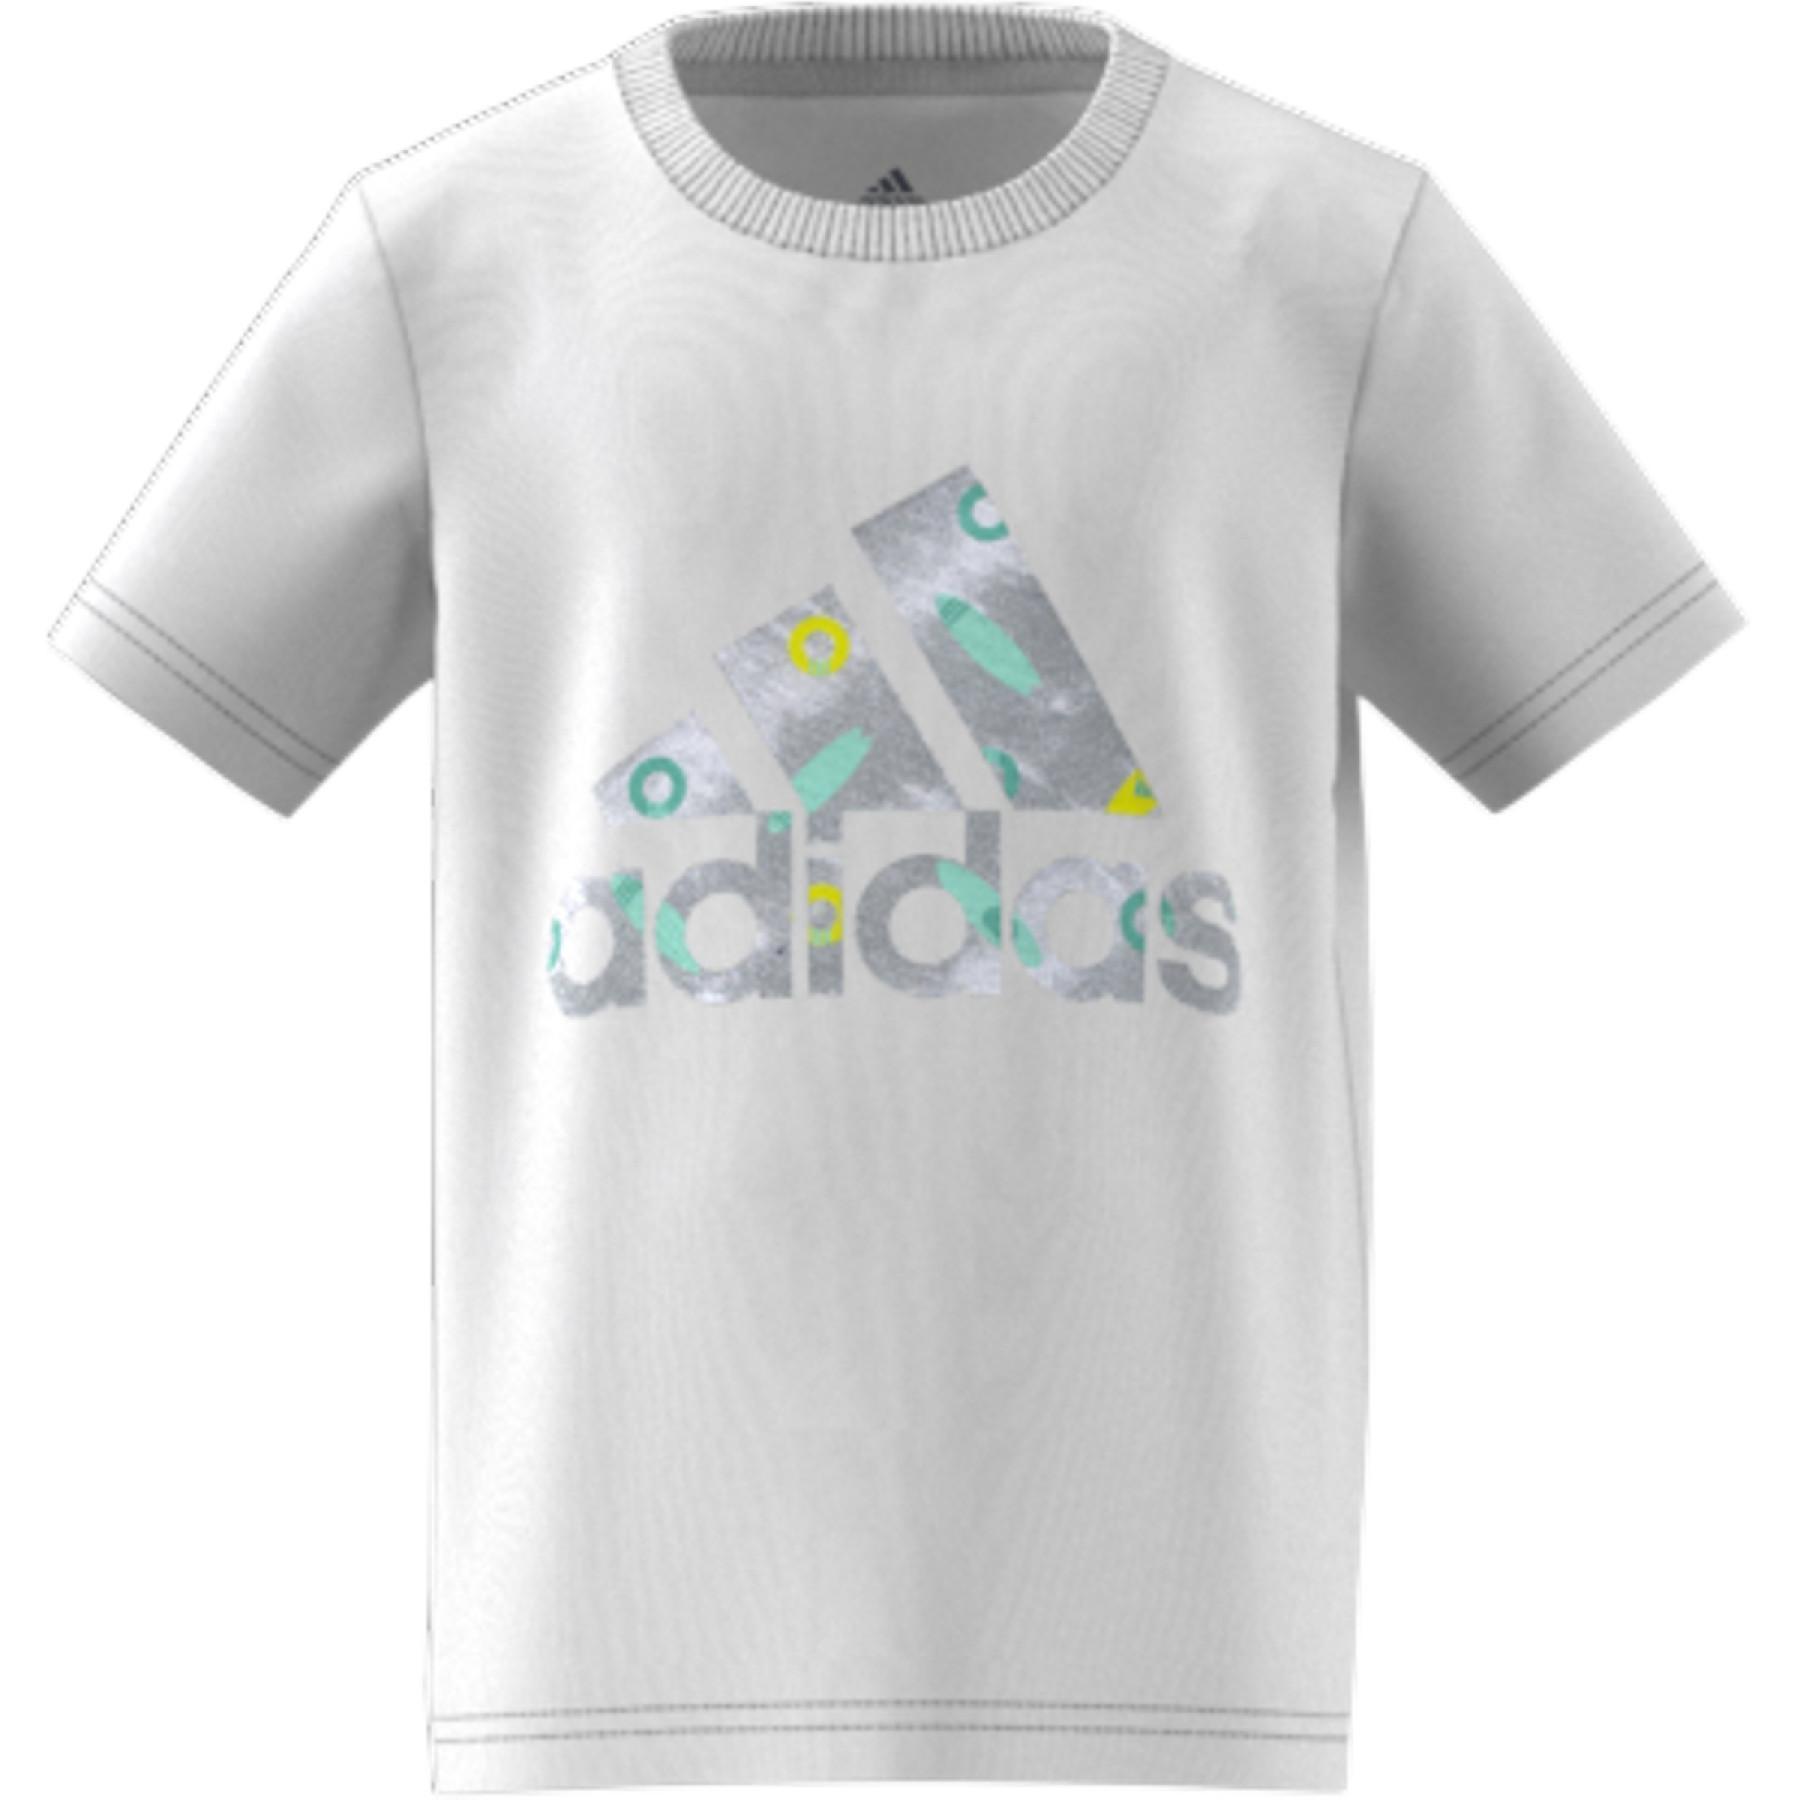 Child's T-shirt adidas Badge of Sport